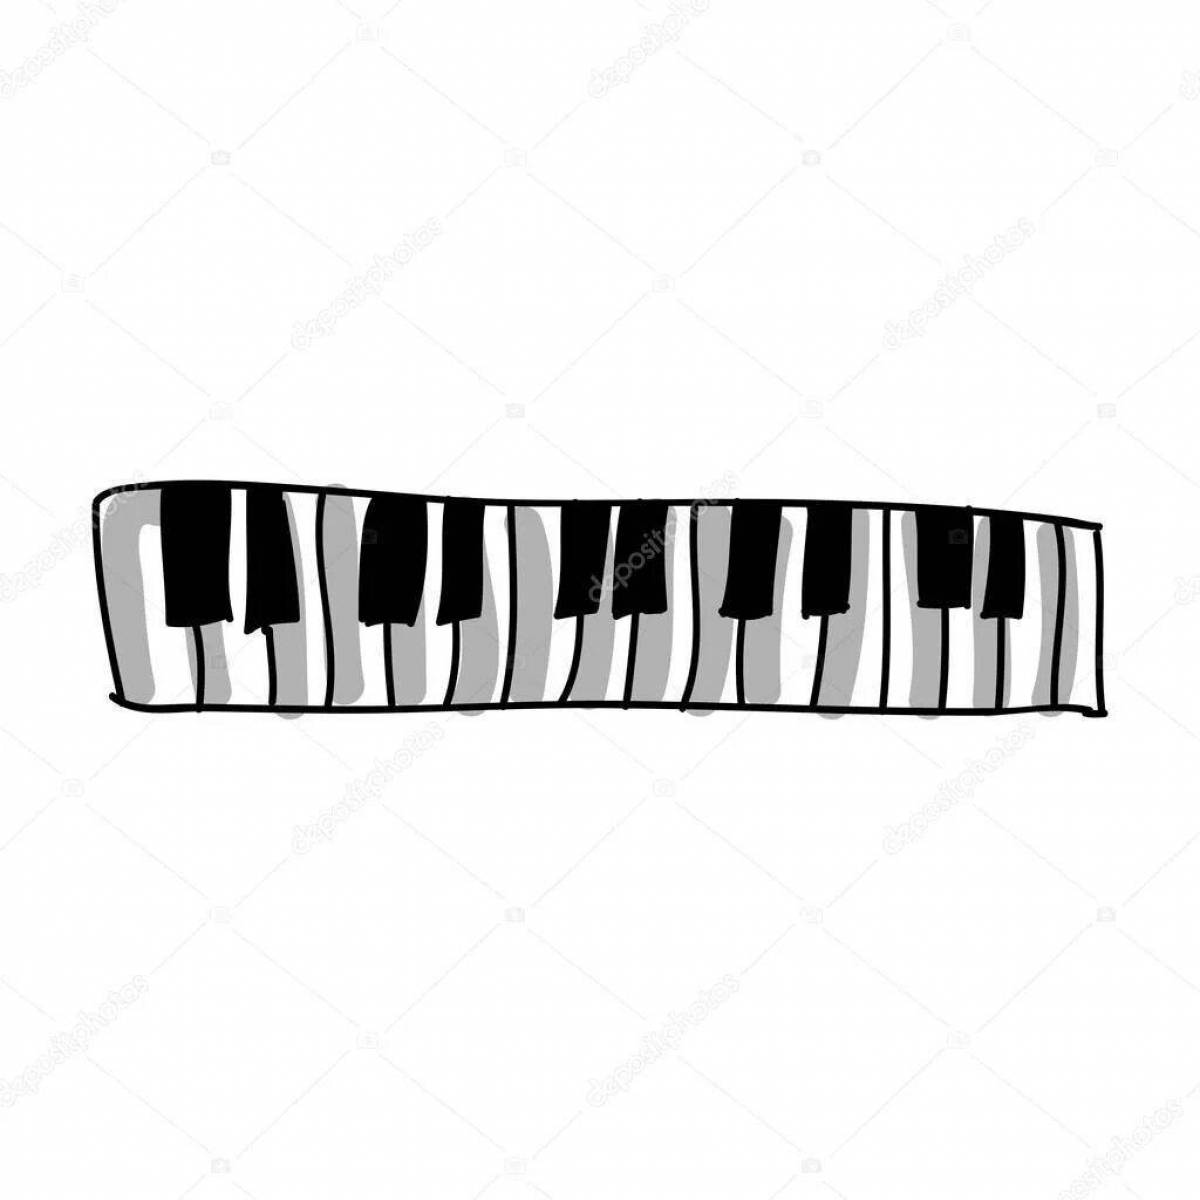 Coloring book spellbinding piano keys